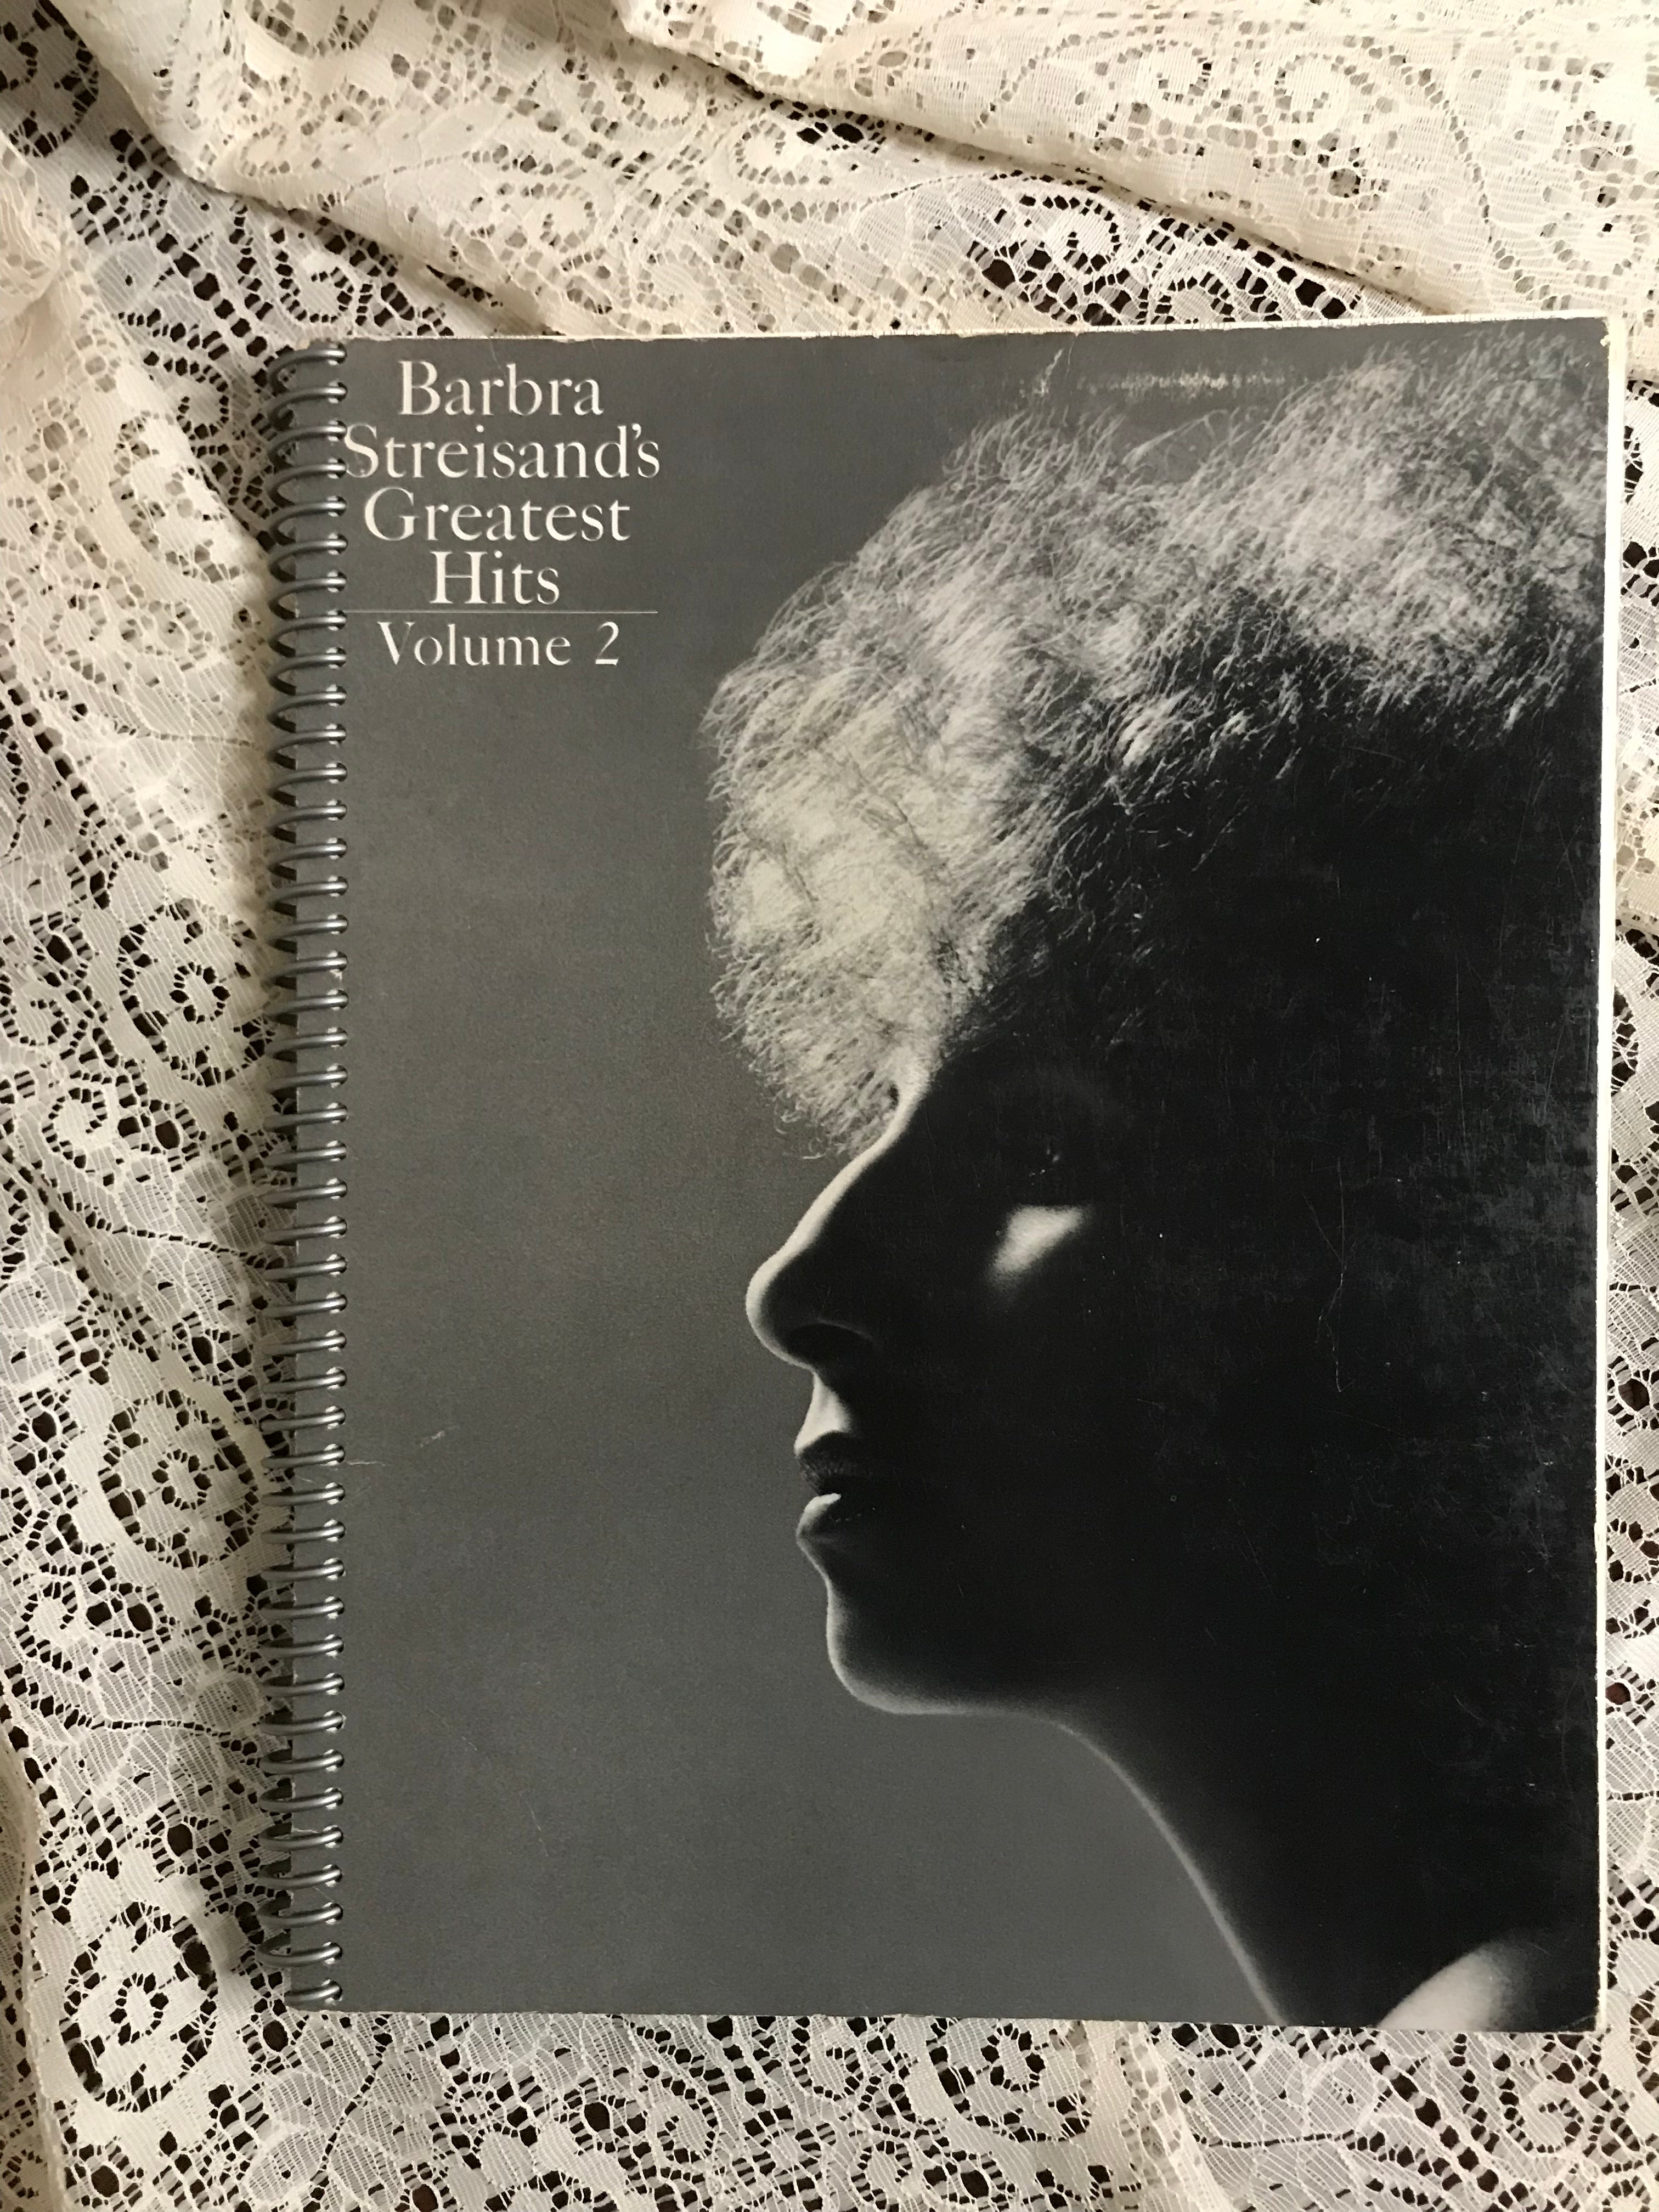 Barbra Streisand’s Greatest Hits Album Cover Notebook